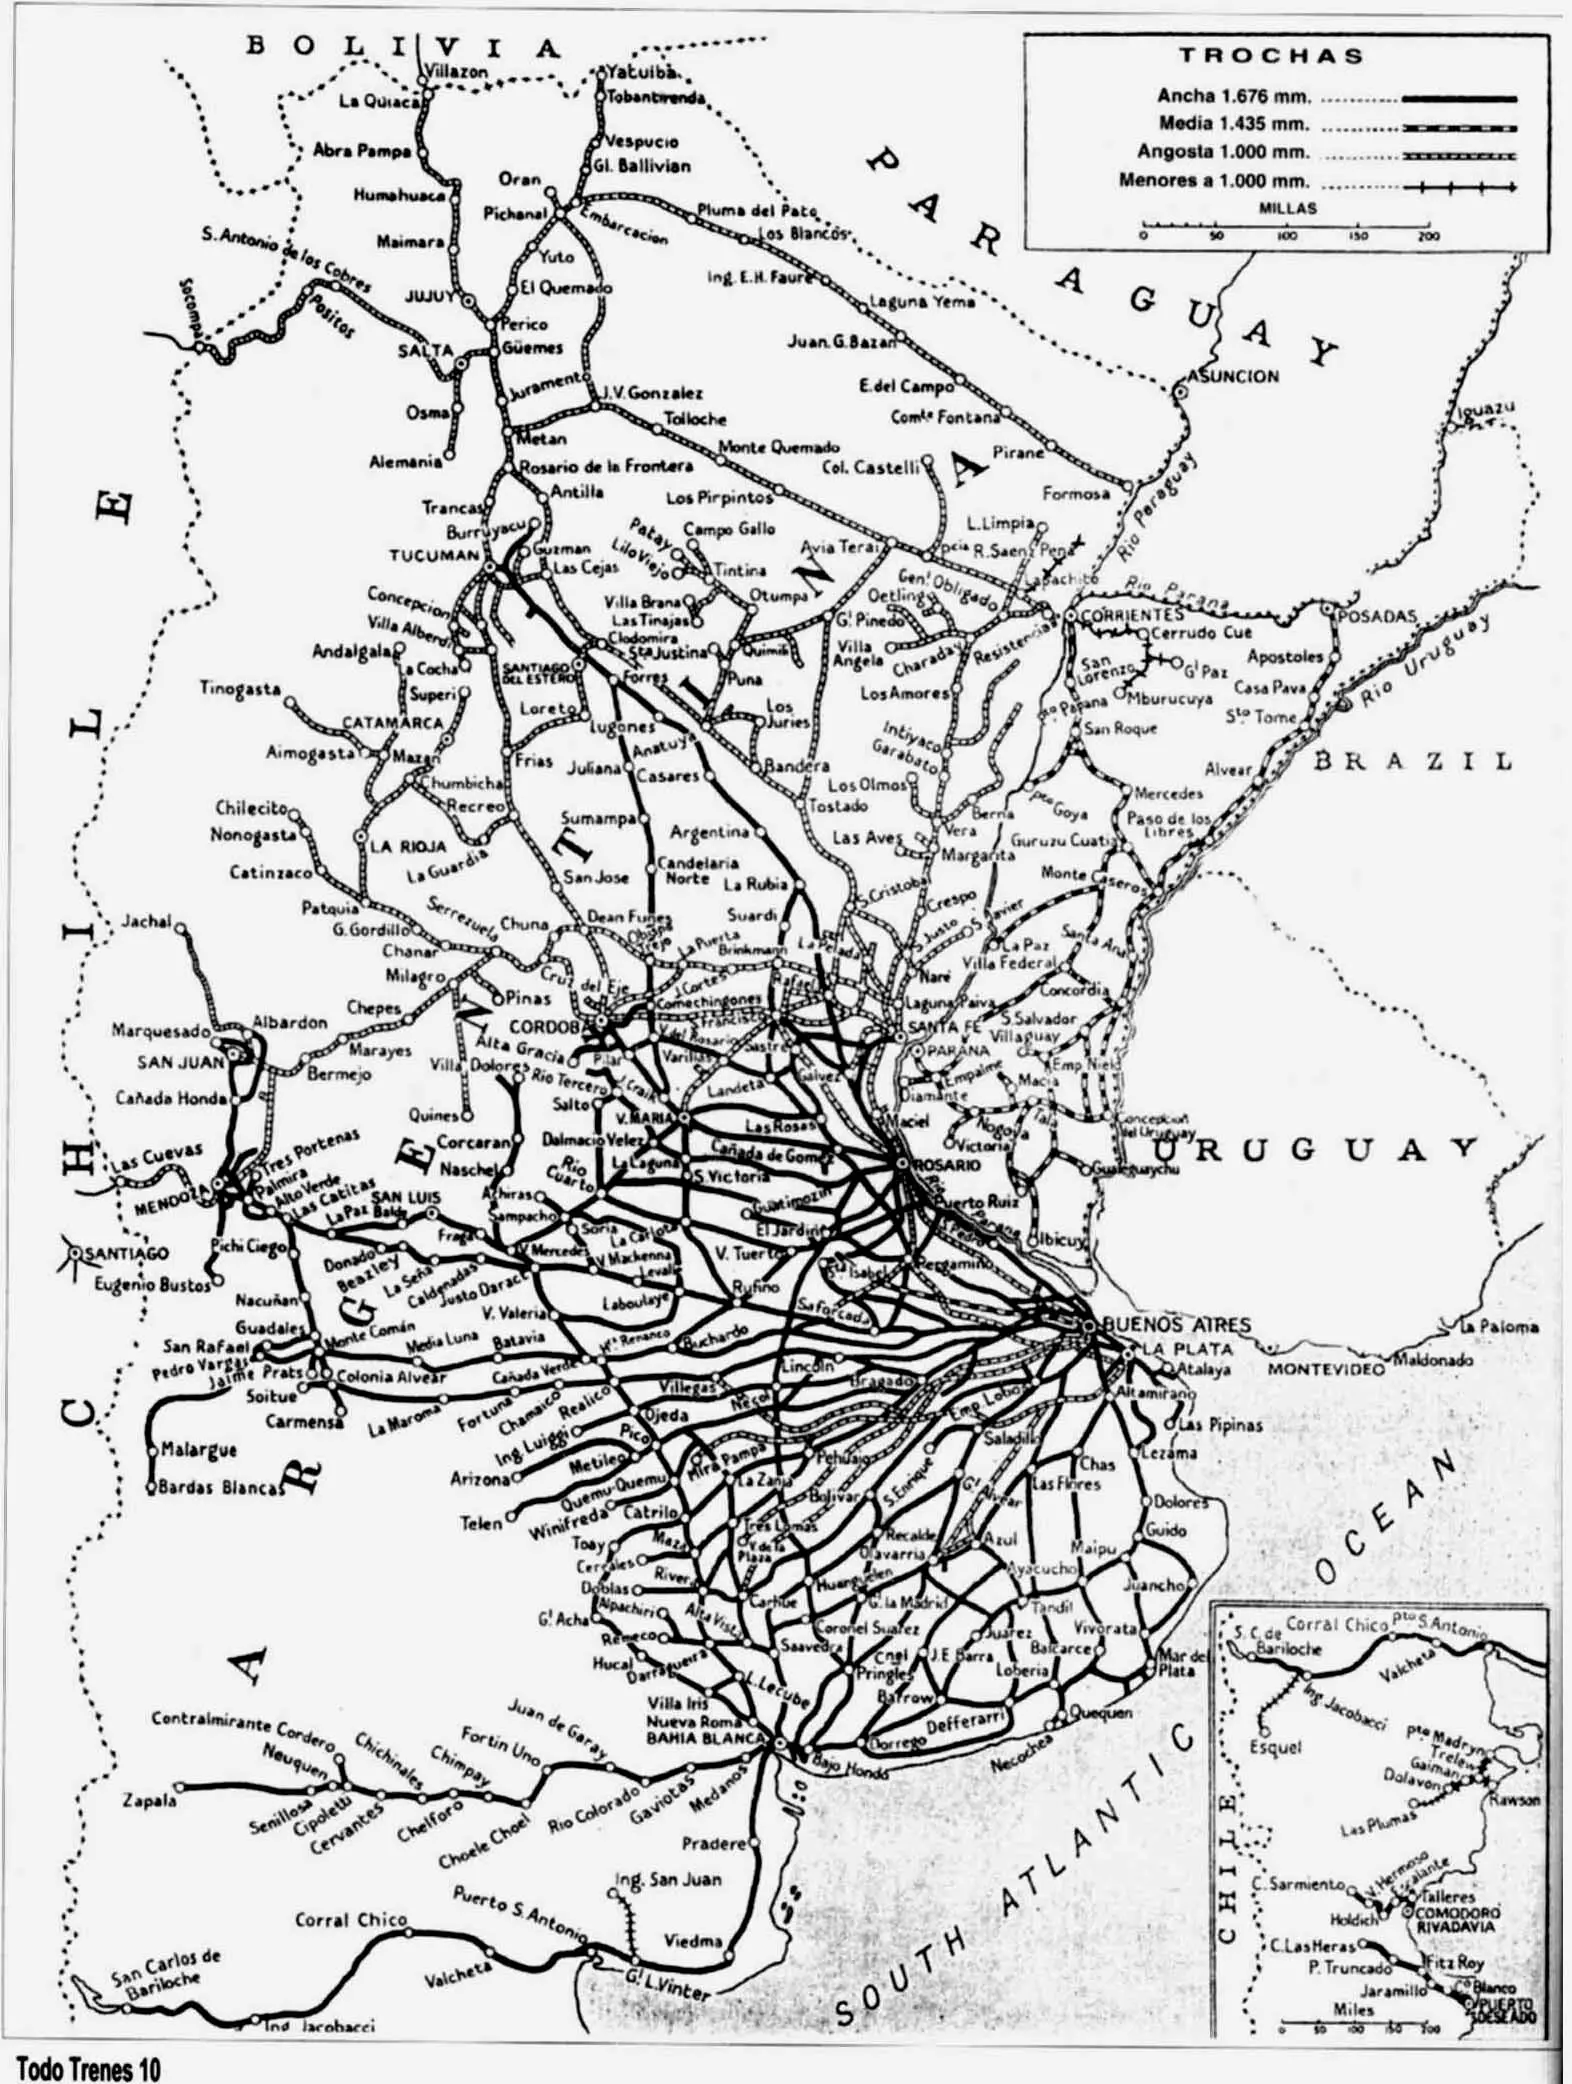 historia del ferrocarril en argentina resumen - Qué importancia tuvo el ferrocarril para la economía Argentina